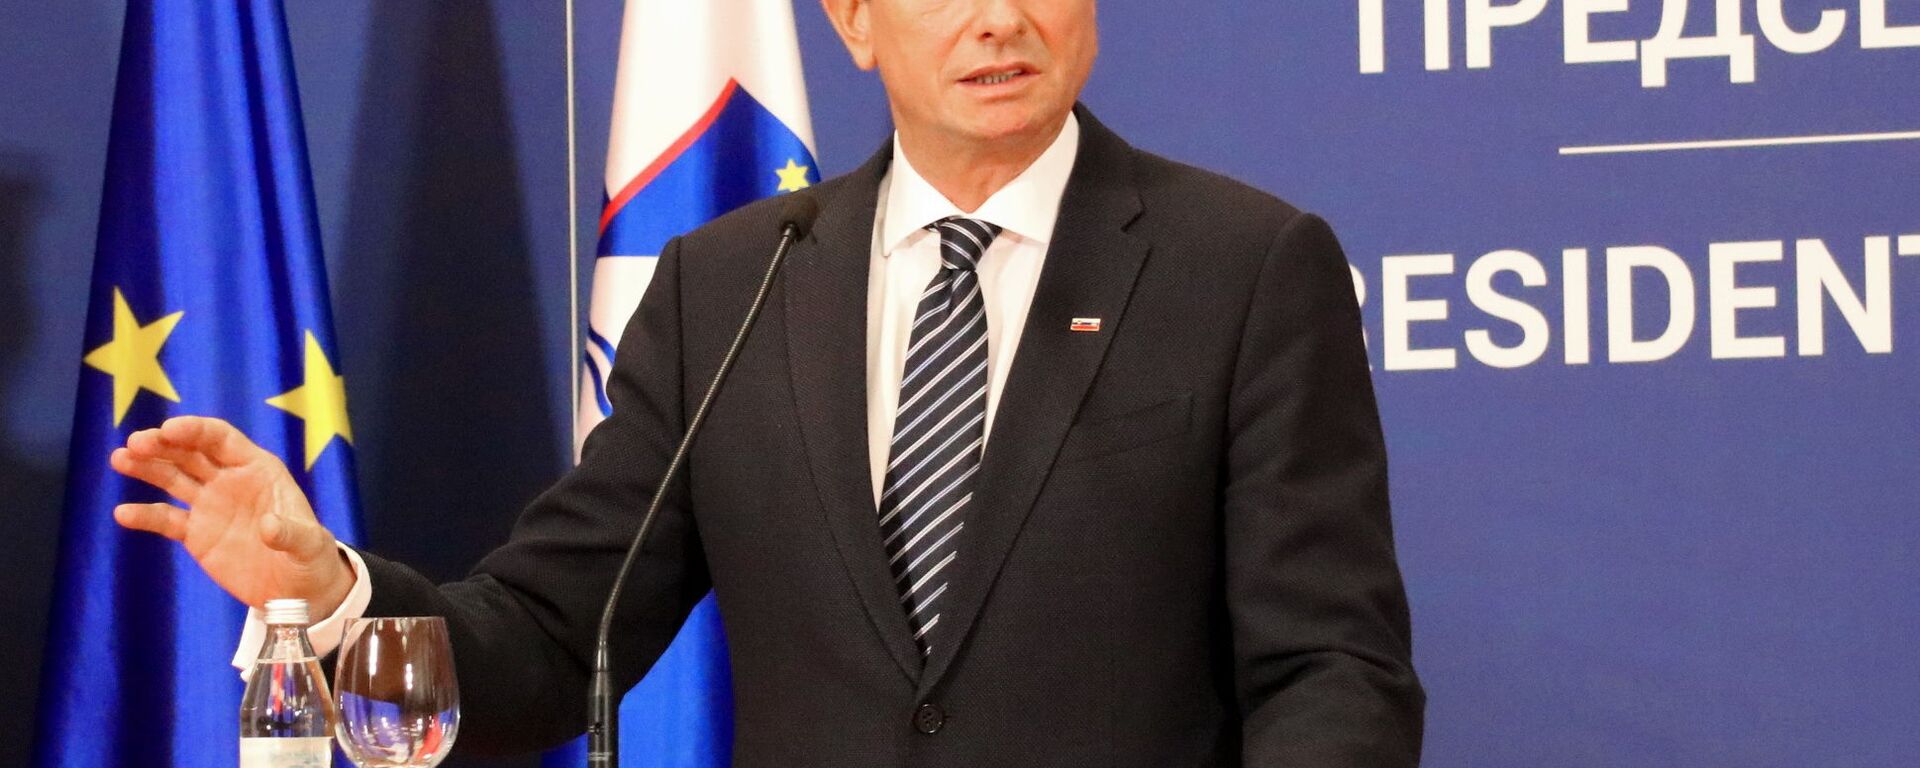 Predsednik Republike Slovenije Borut Pahor - Sputnik Srbija, 1920, 30.11.2021